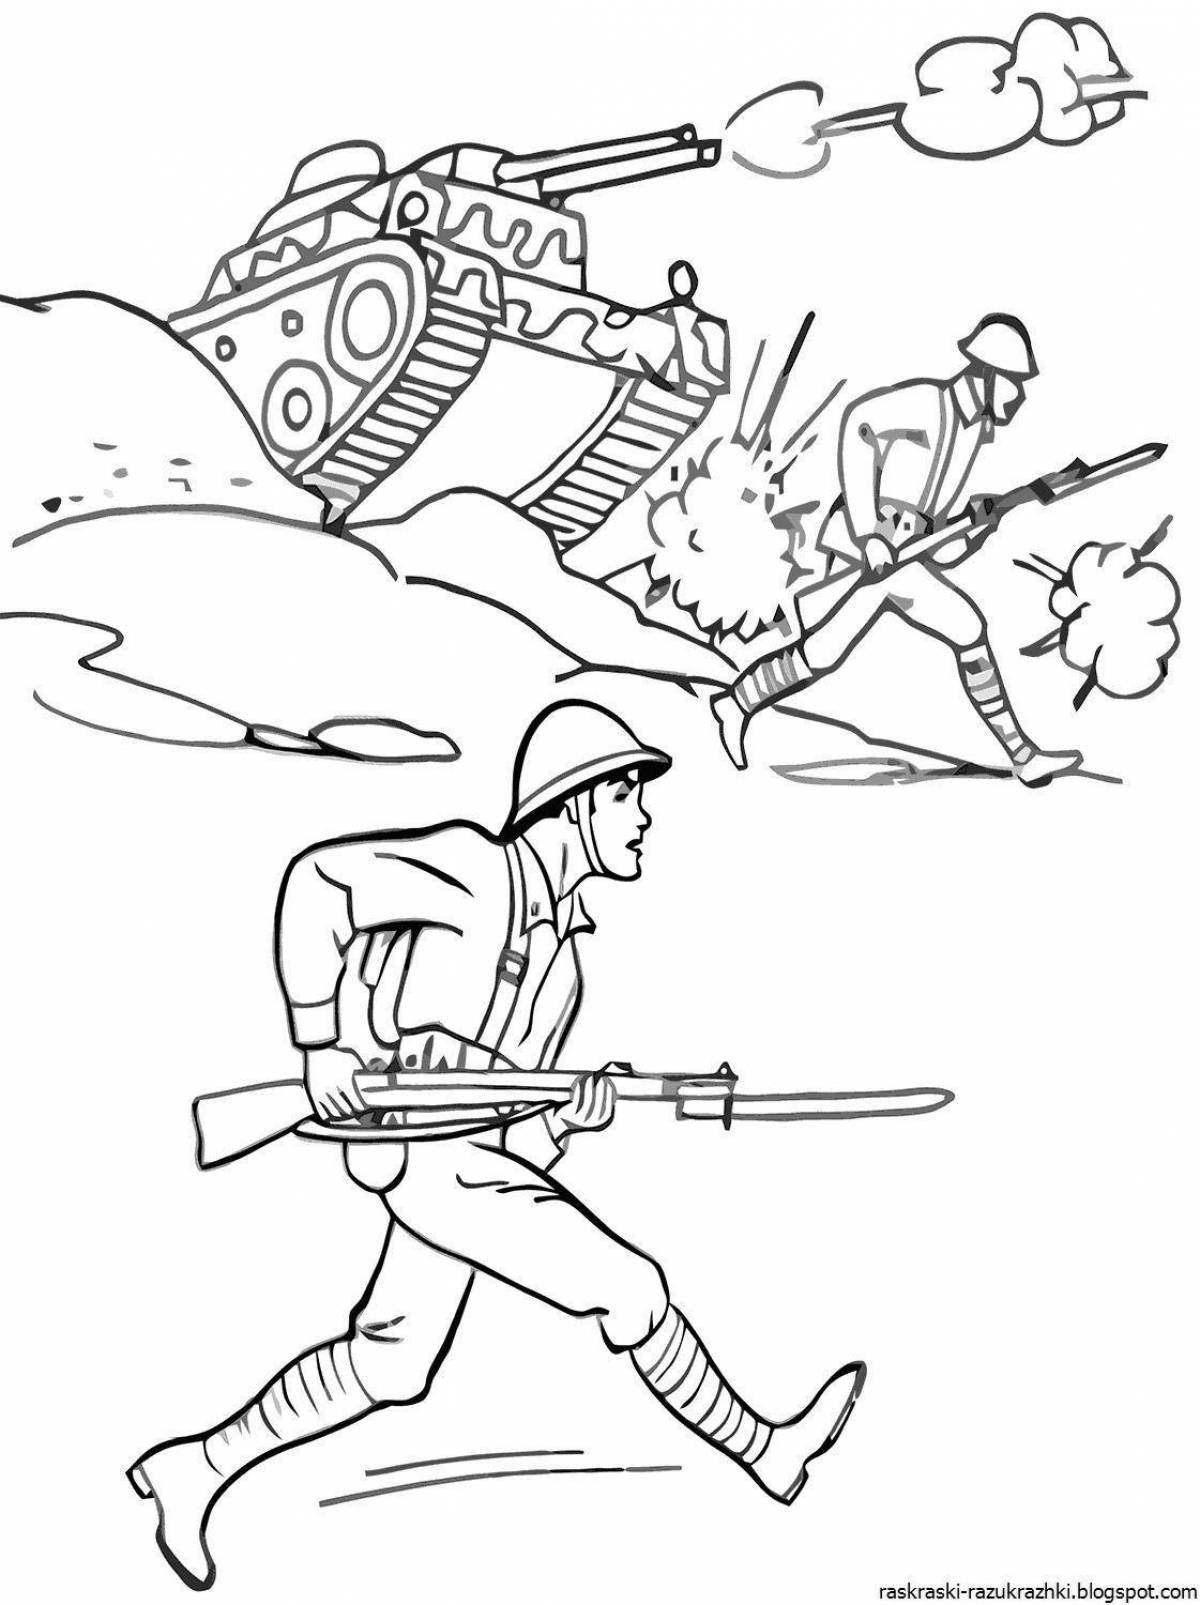 Wonderful coloring war 1941-1945